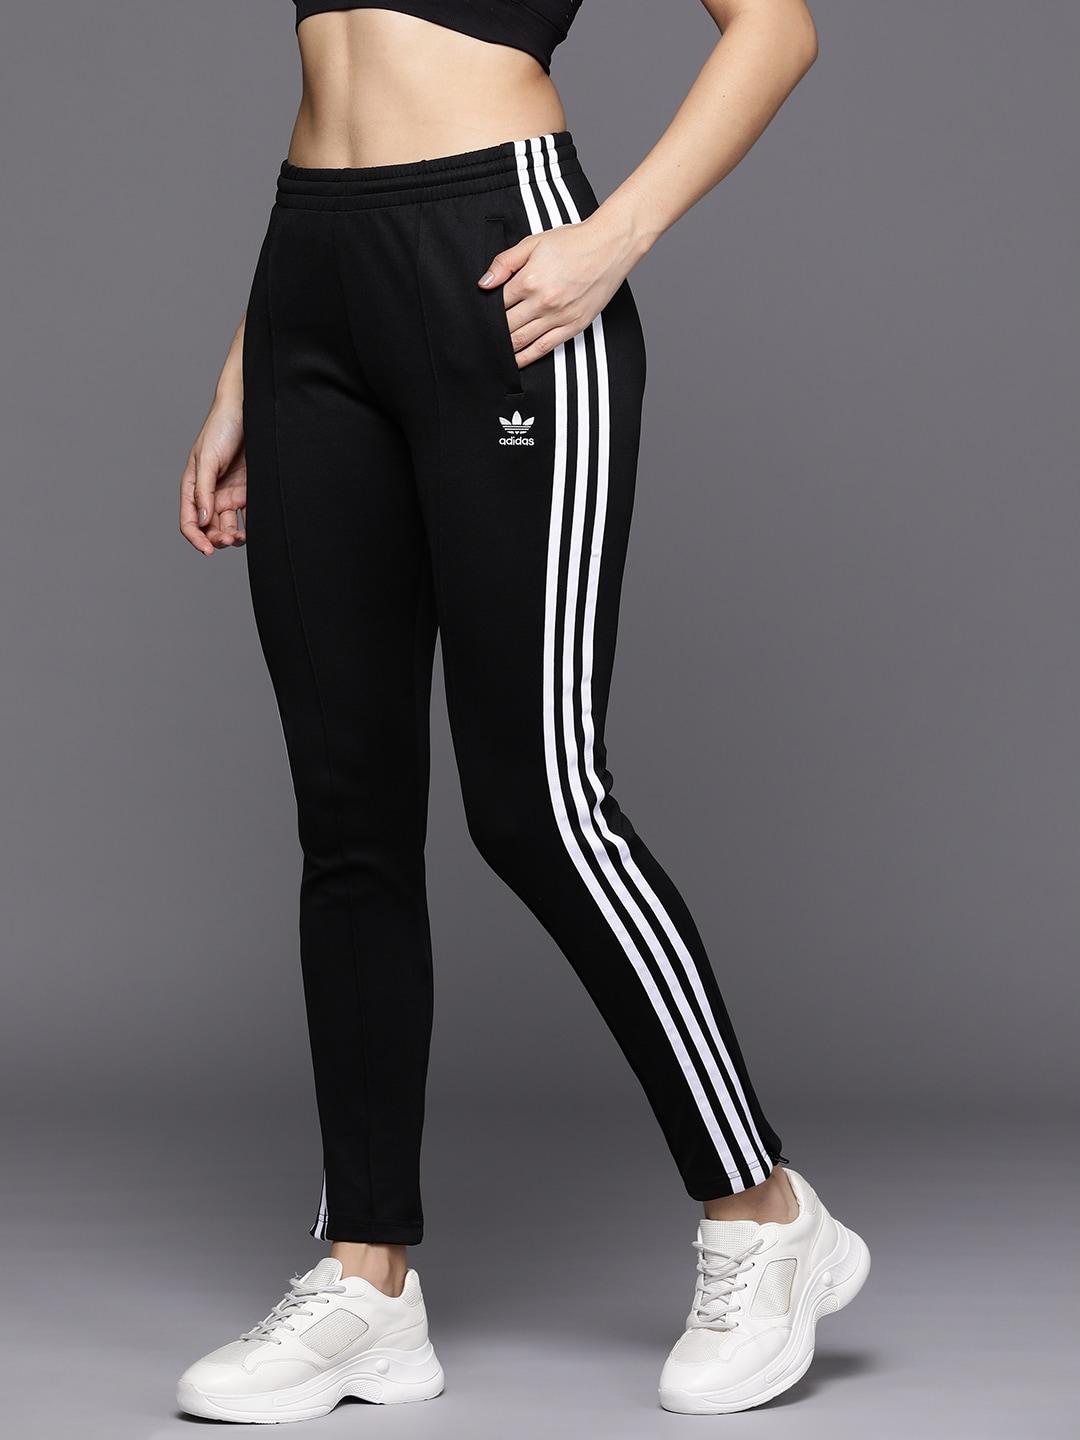 adidas-originals-women-3-striped-adicolor-track-pants